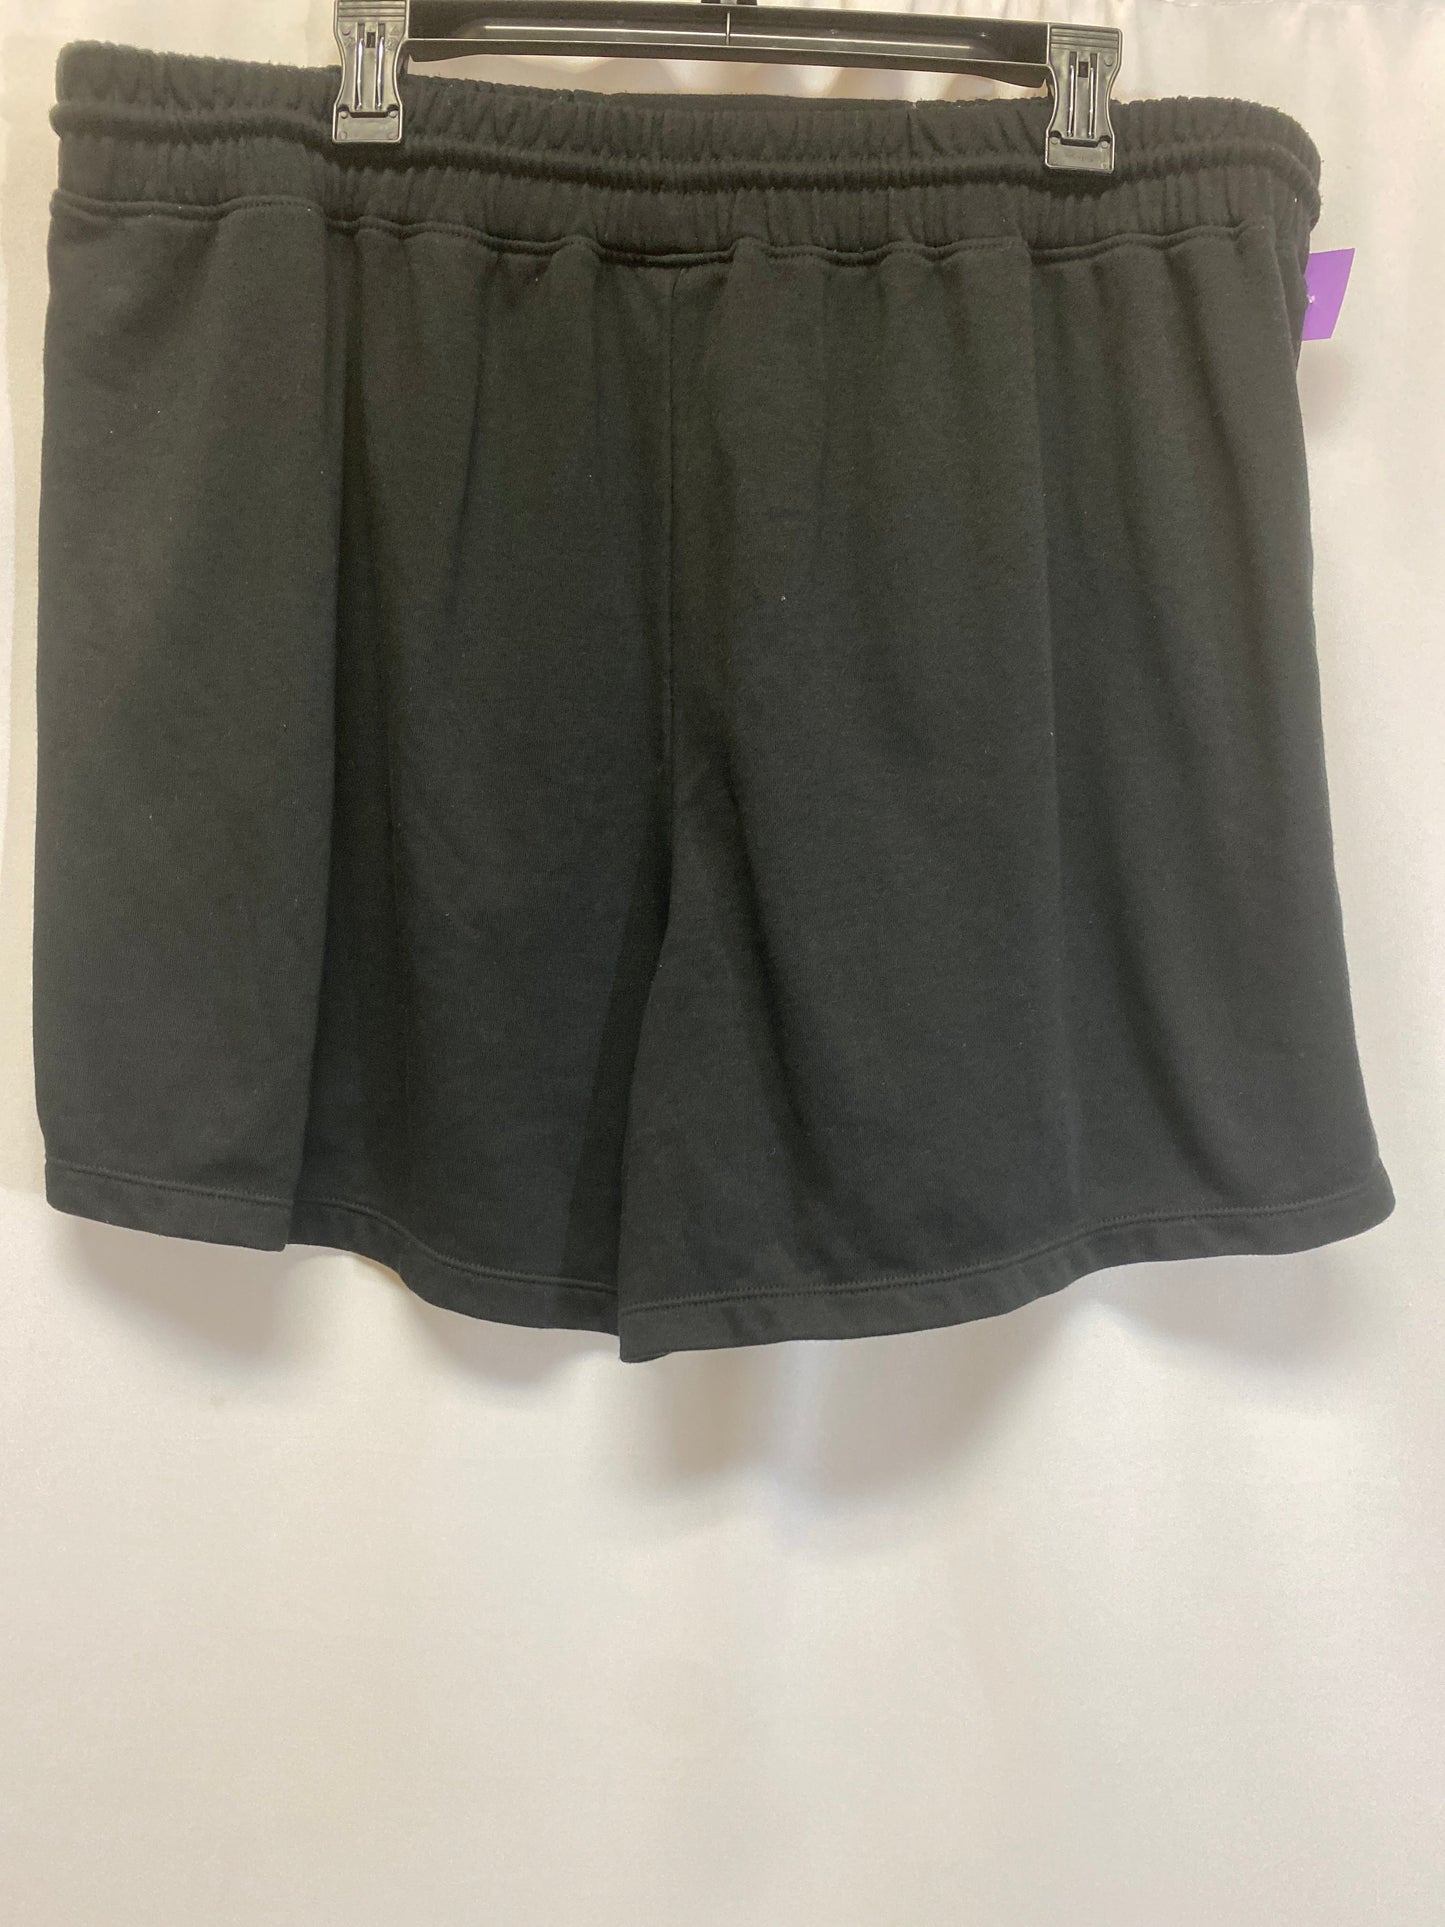 Black Athletic Shorts Xersion, Size 2x